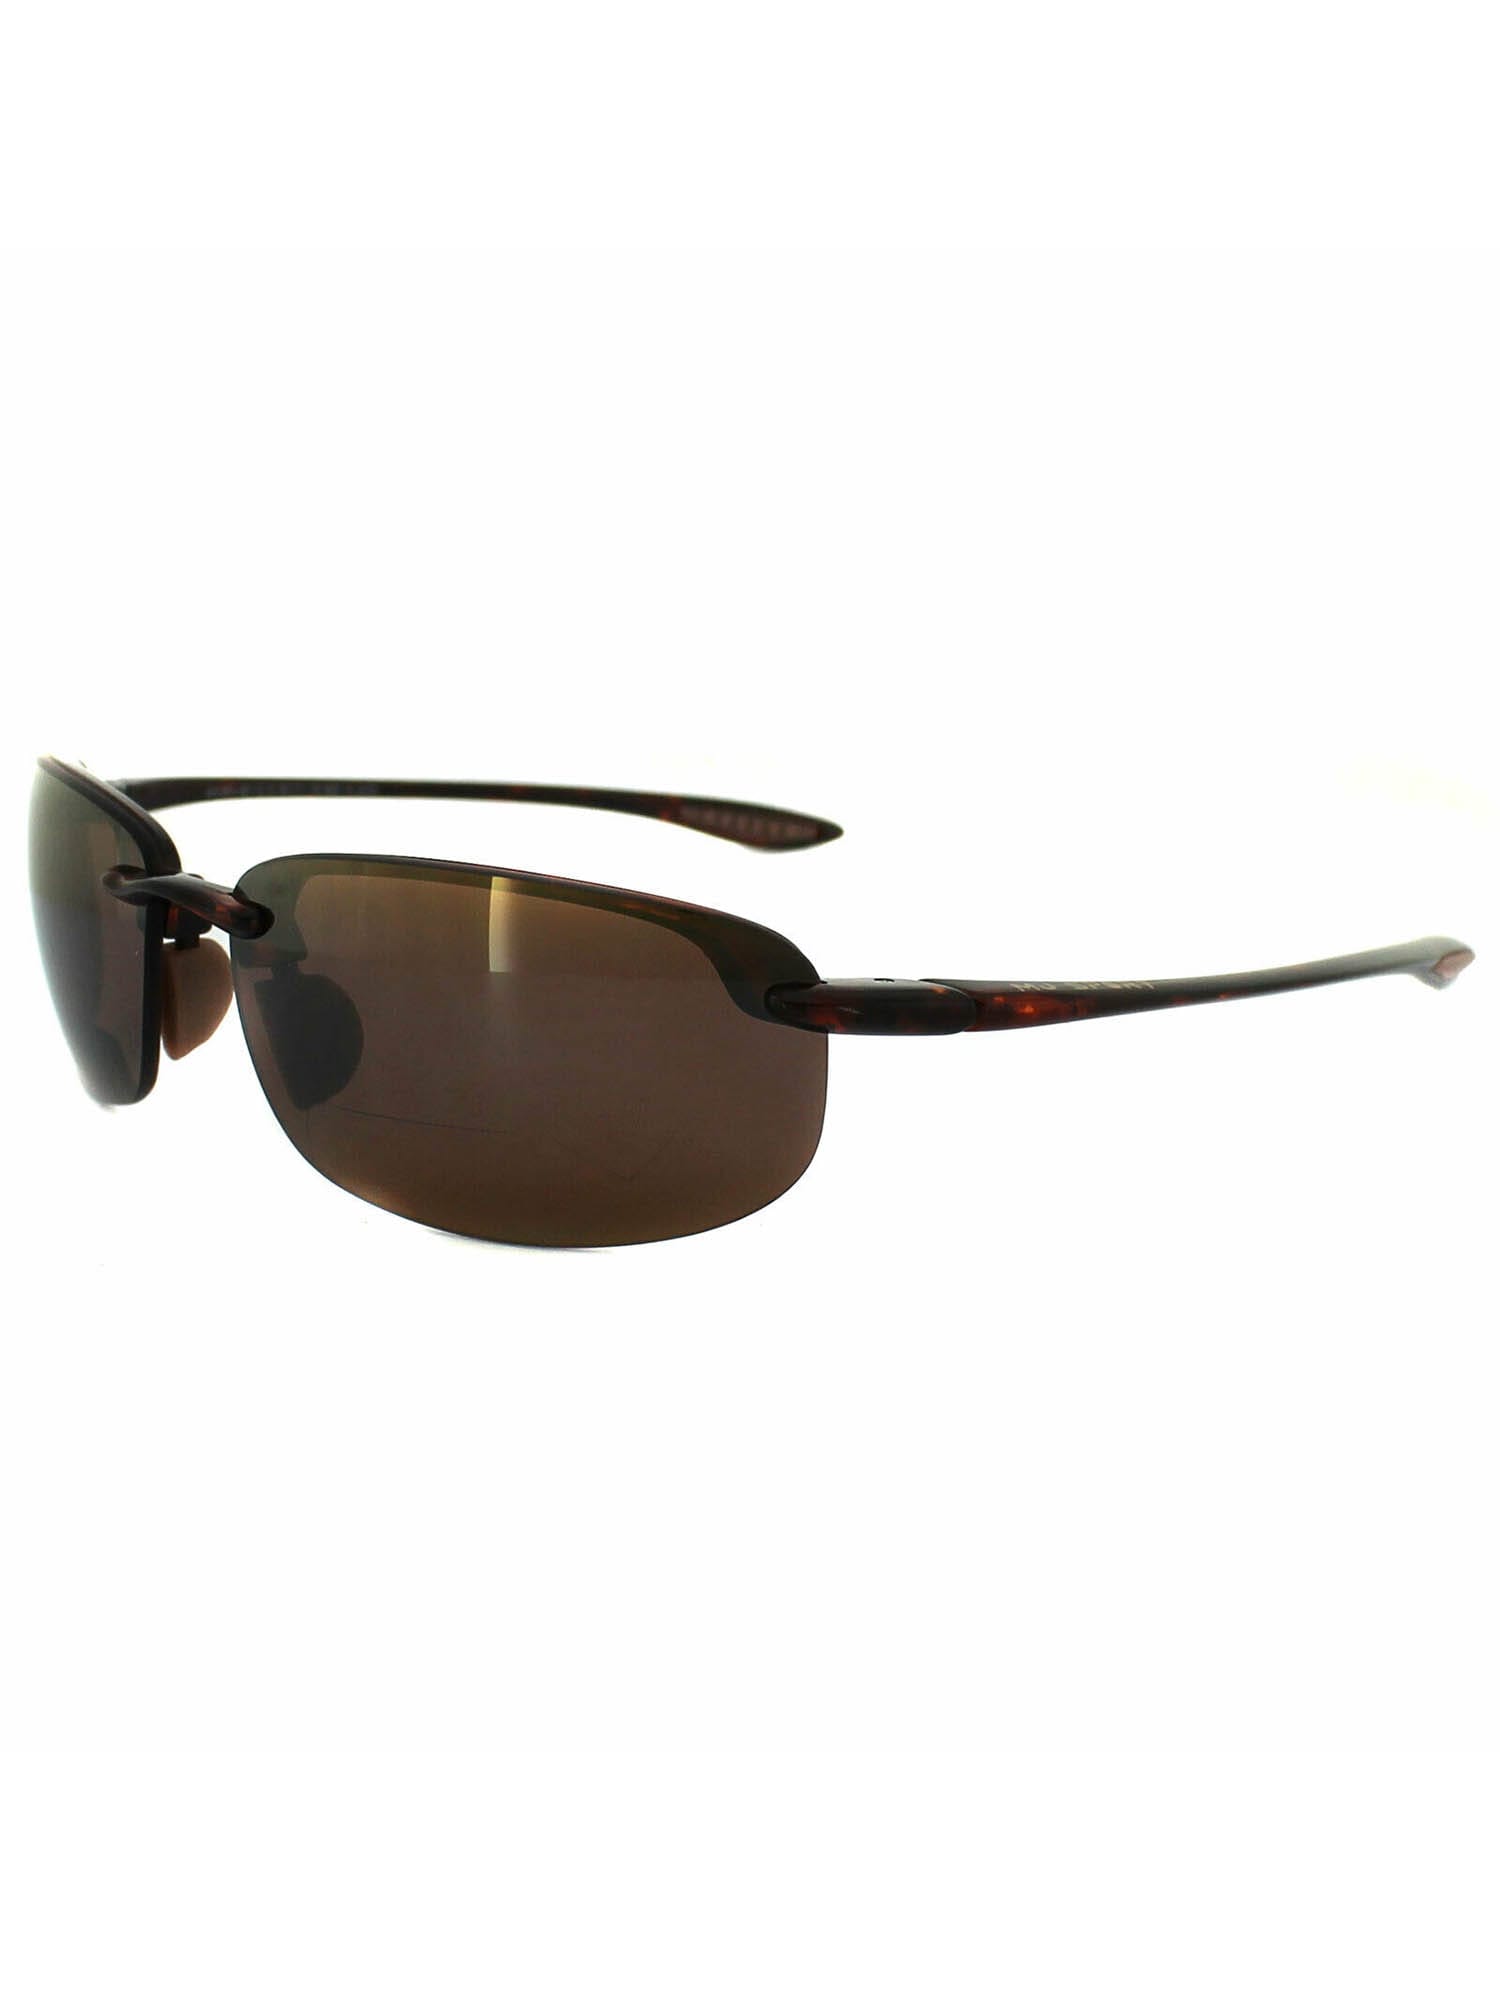 Maui Jim H807/1015 Sunglasses